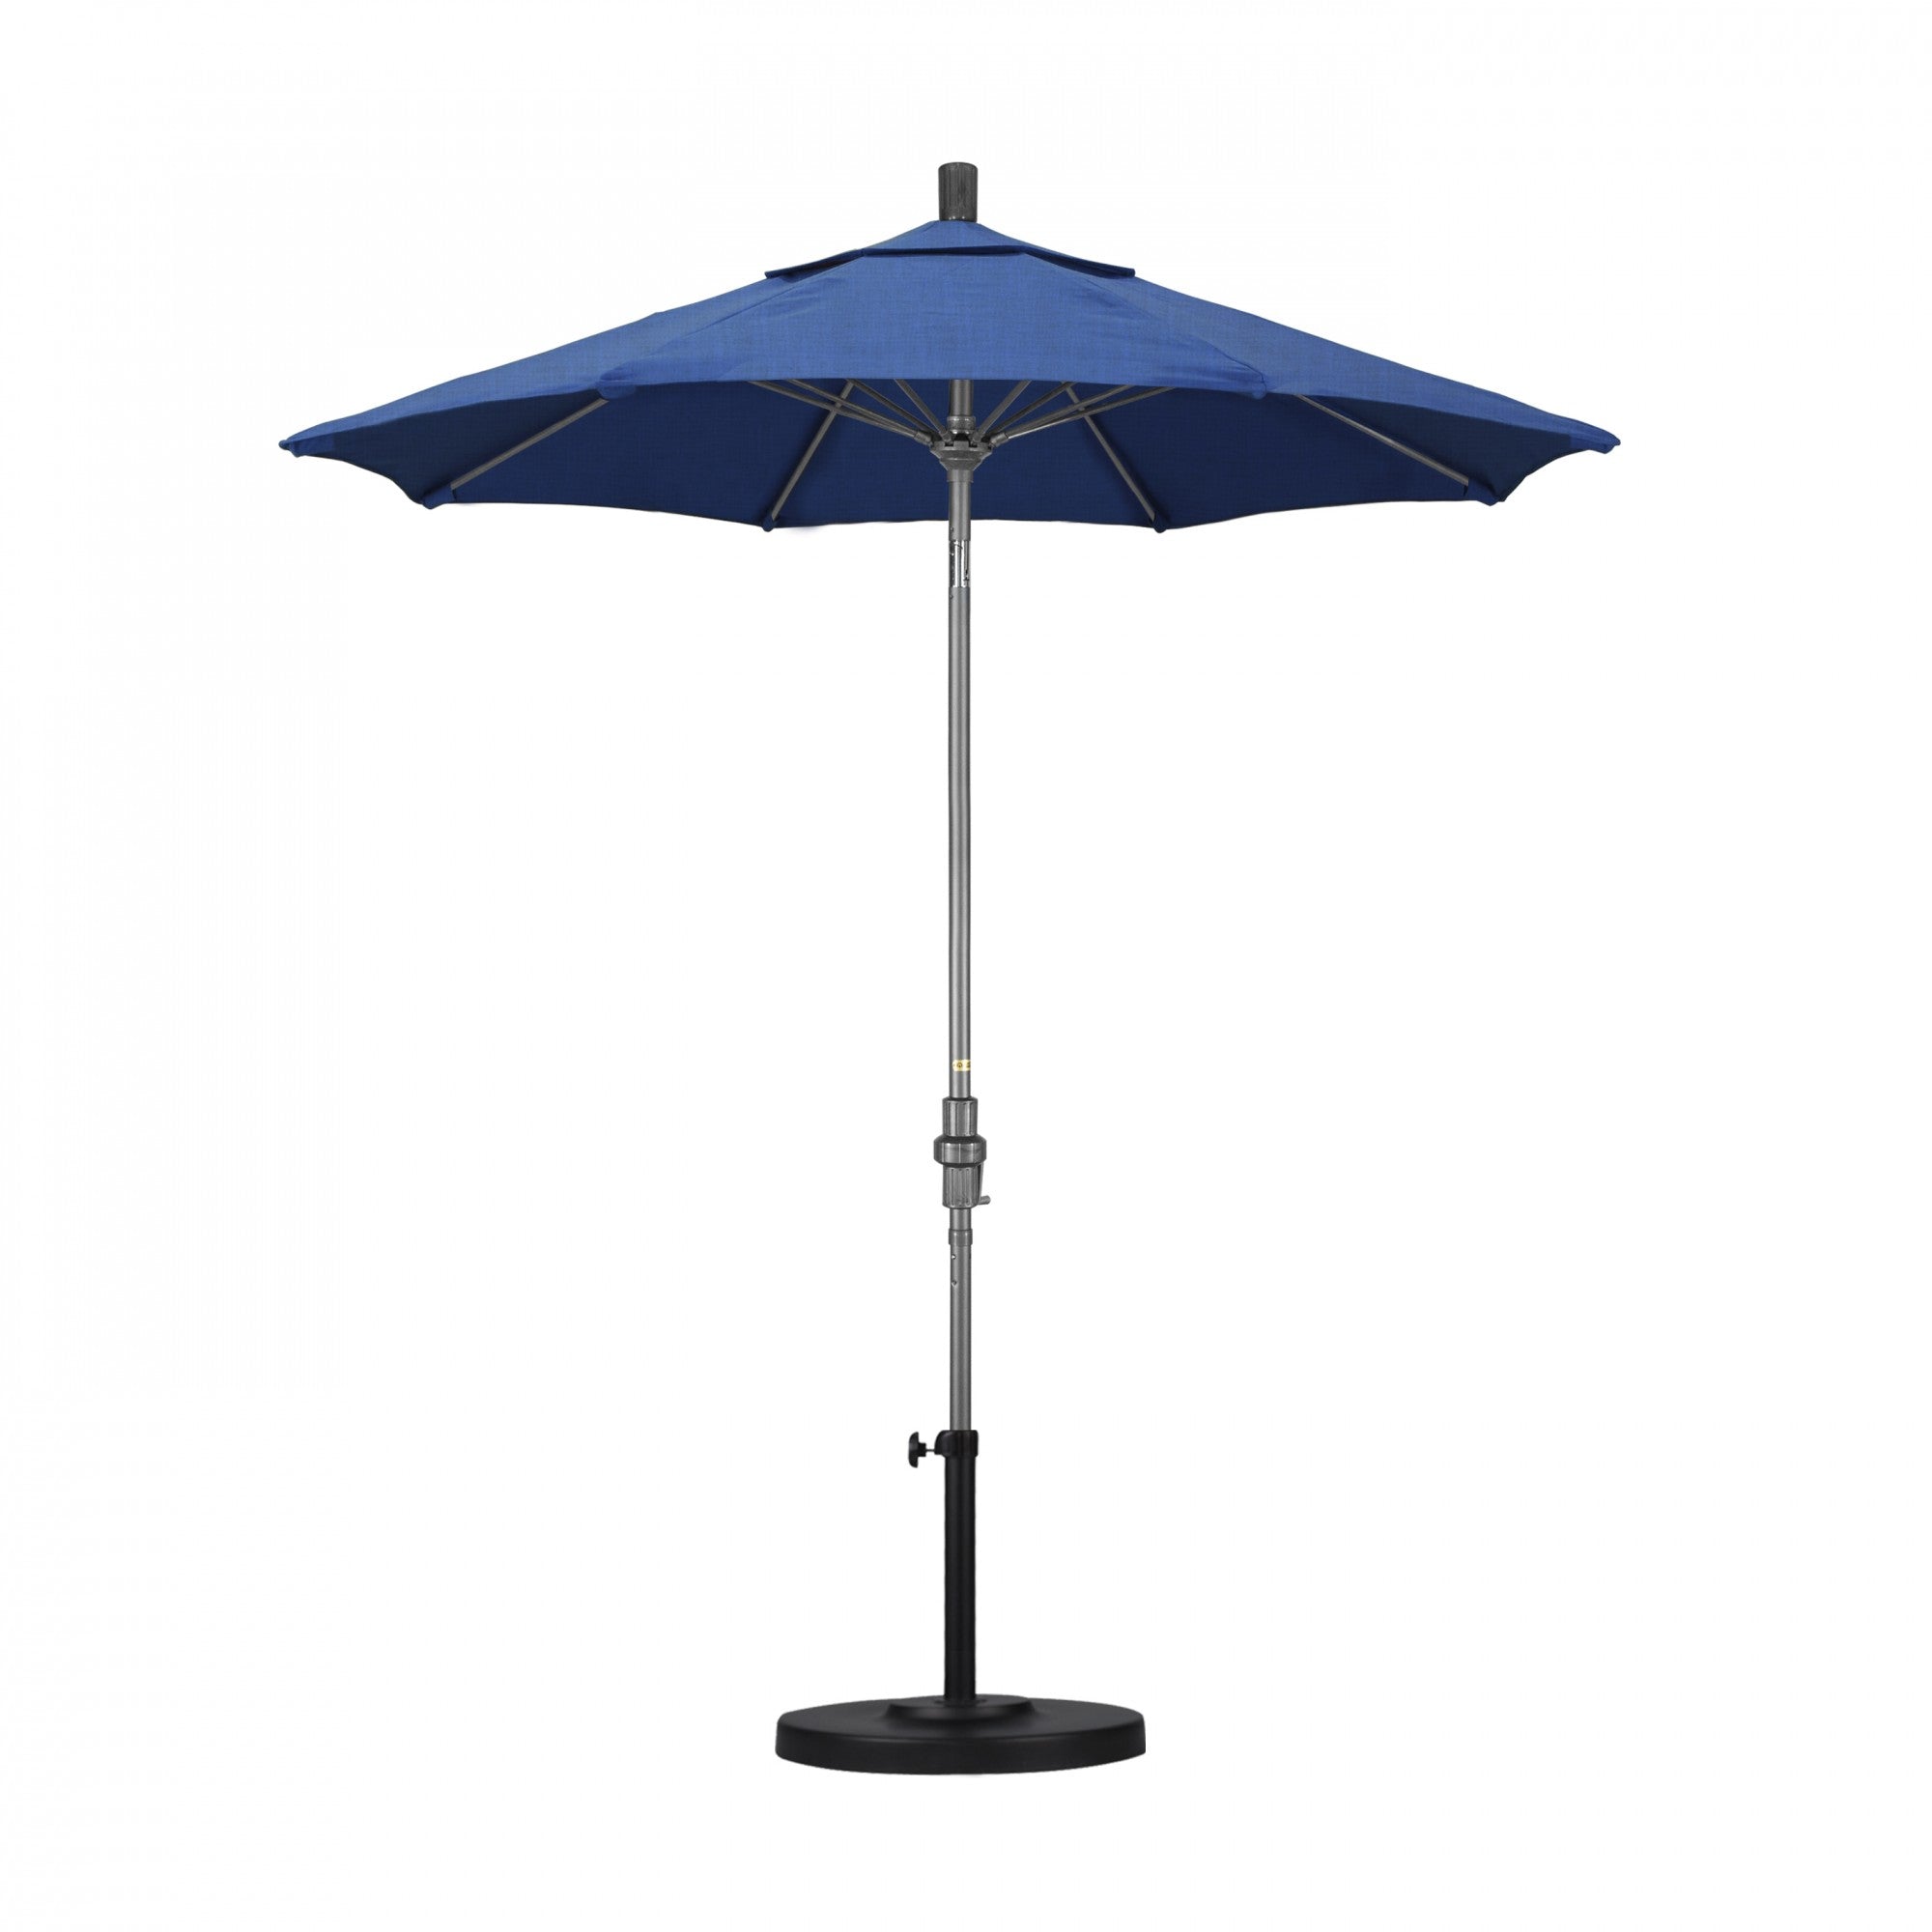 California Umbrella - 7.5' - Patio Umbrella Umbrella - Aluminum Pole - Regatta - Sunbrella  - GSCUF758010-5493